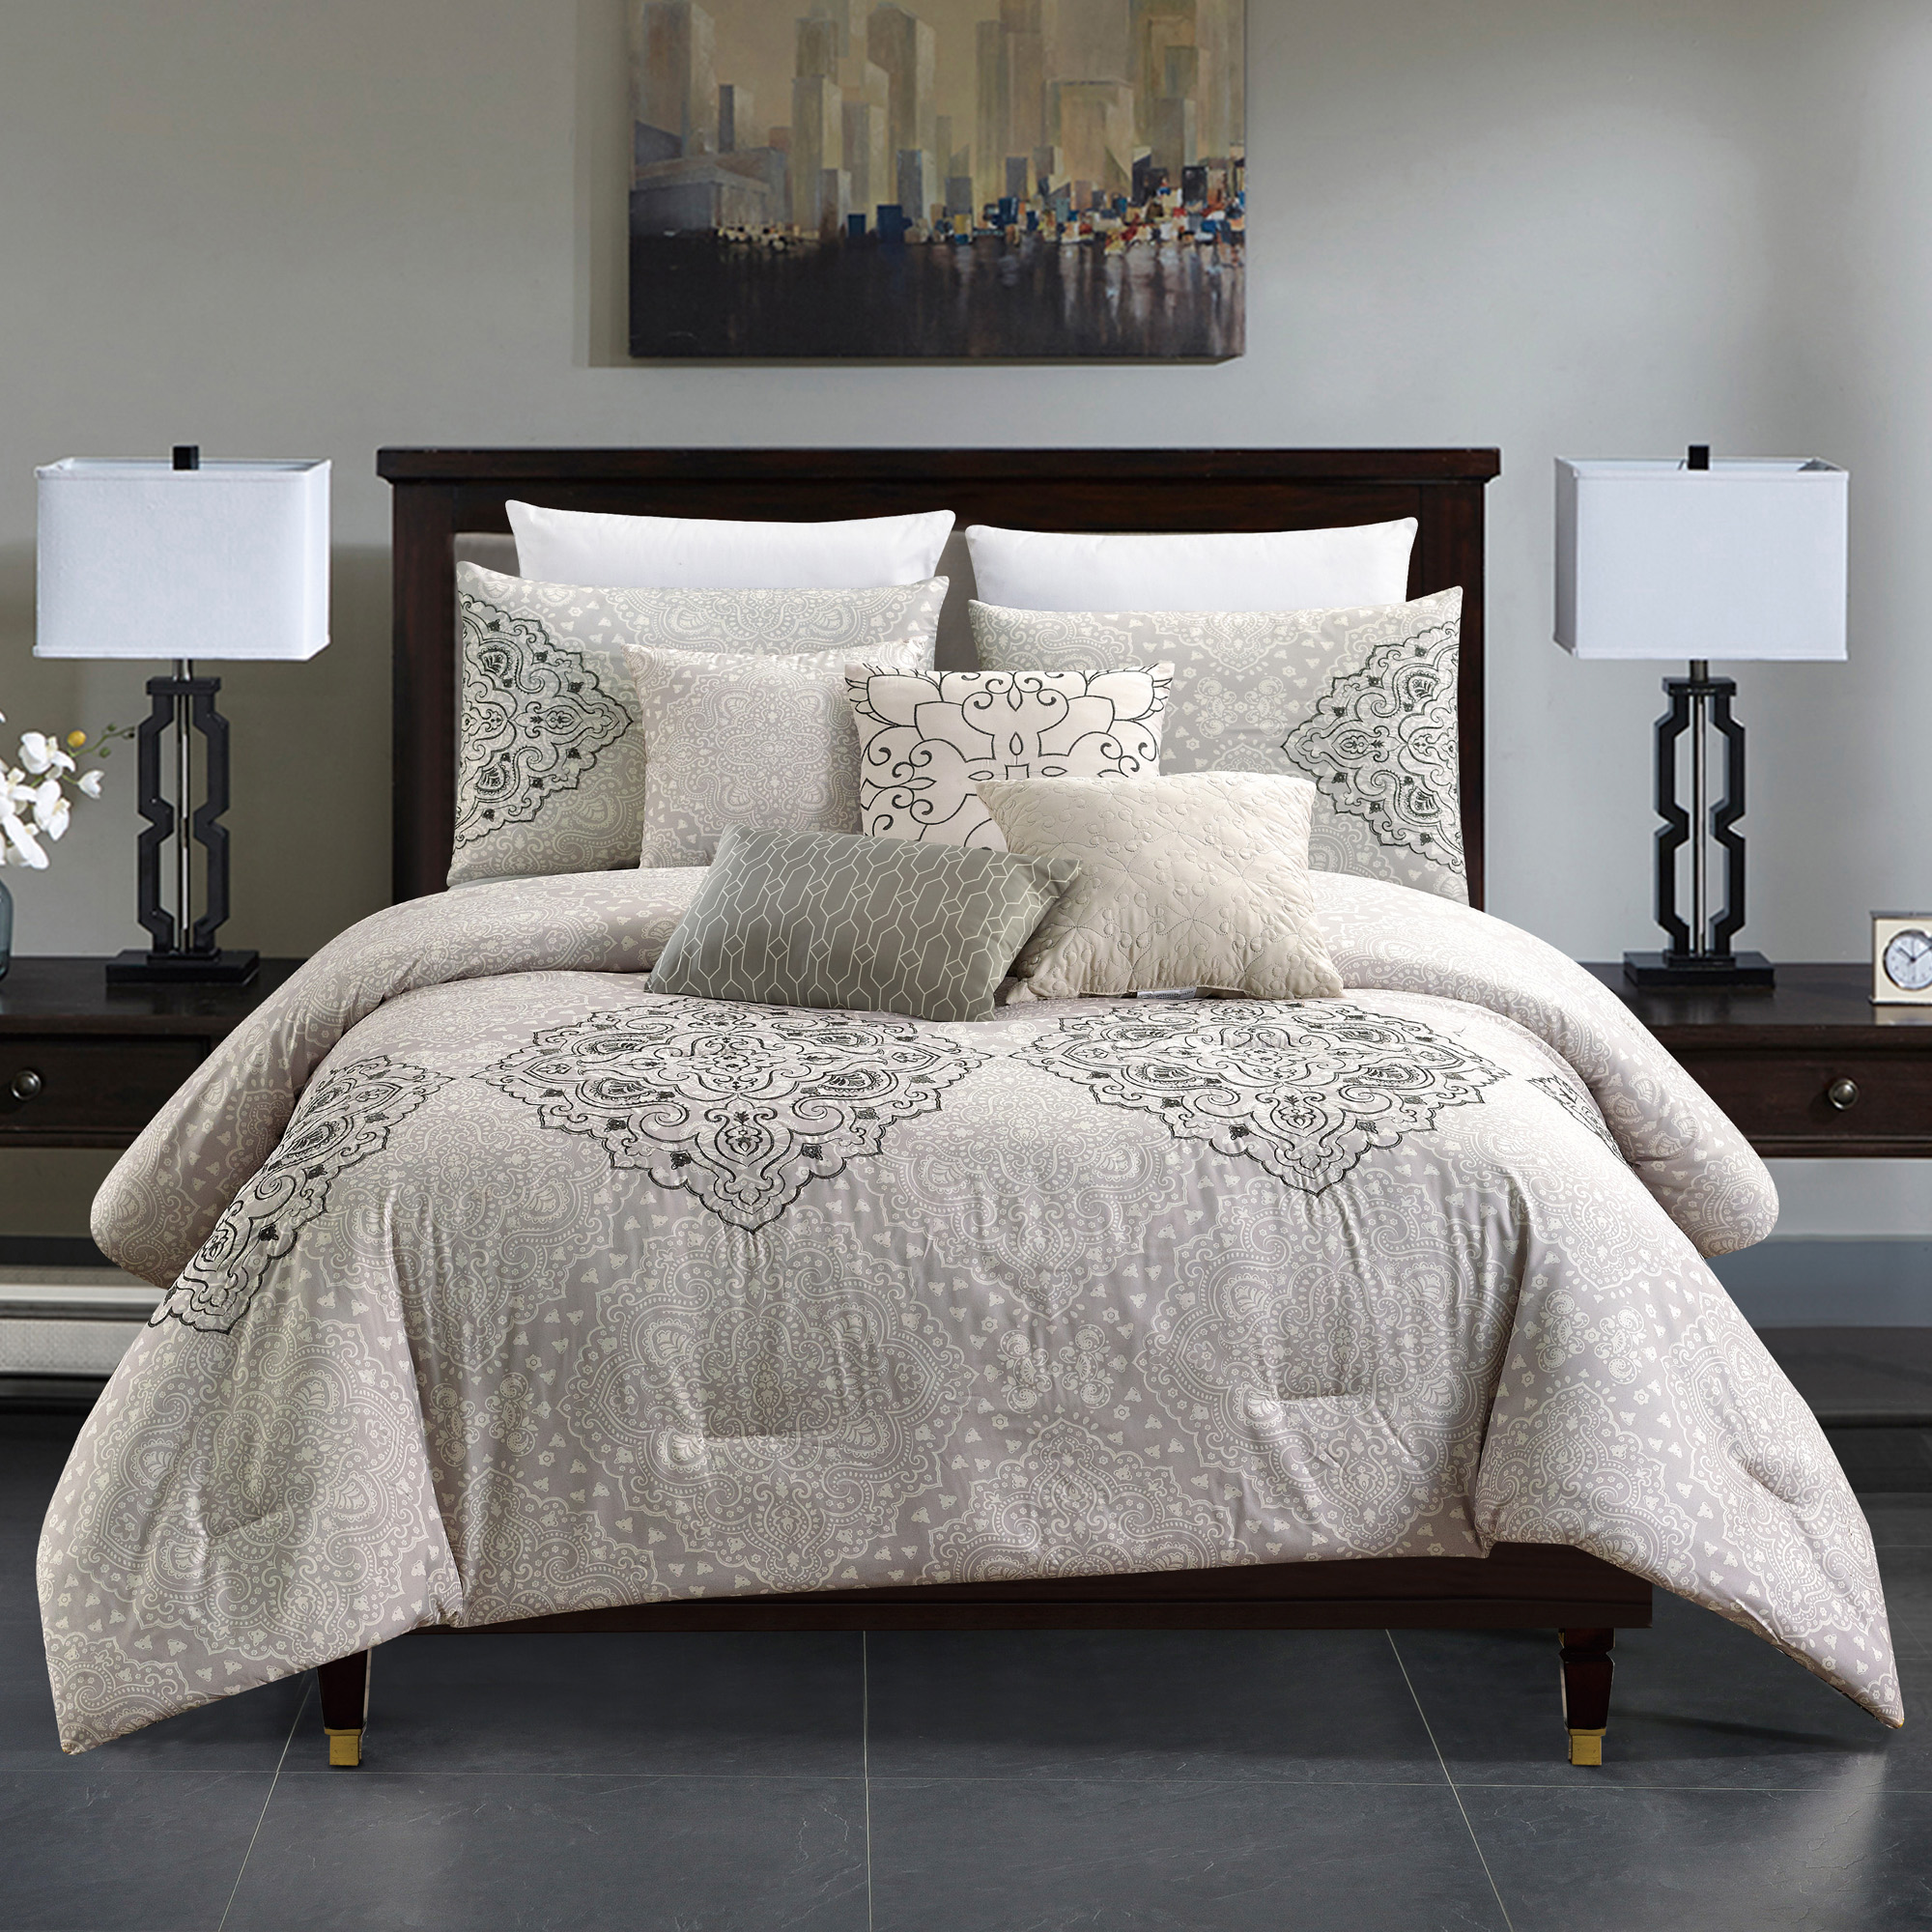 Hgmart Bedding Comforter Set Bed In A, Bed Comforters King Size